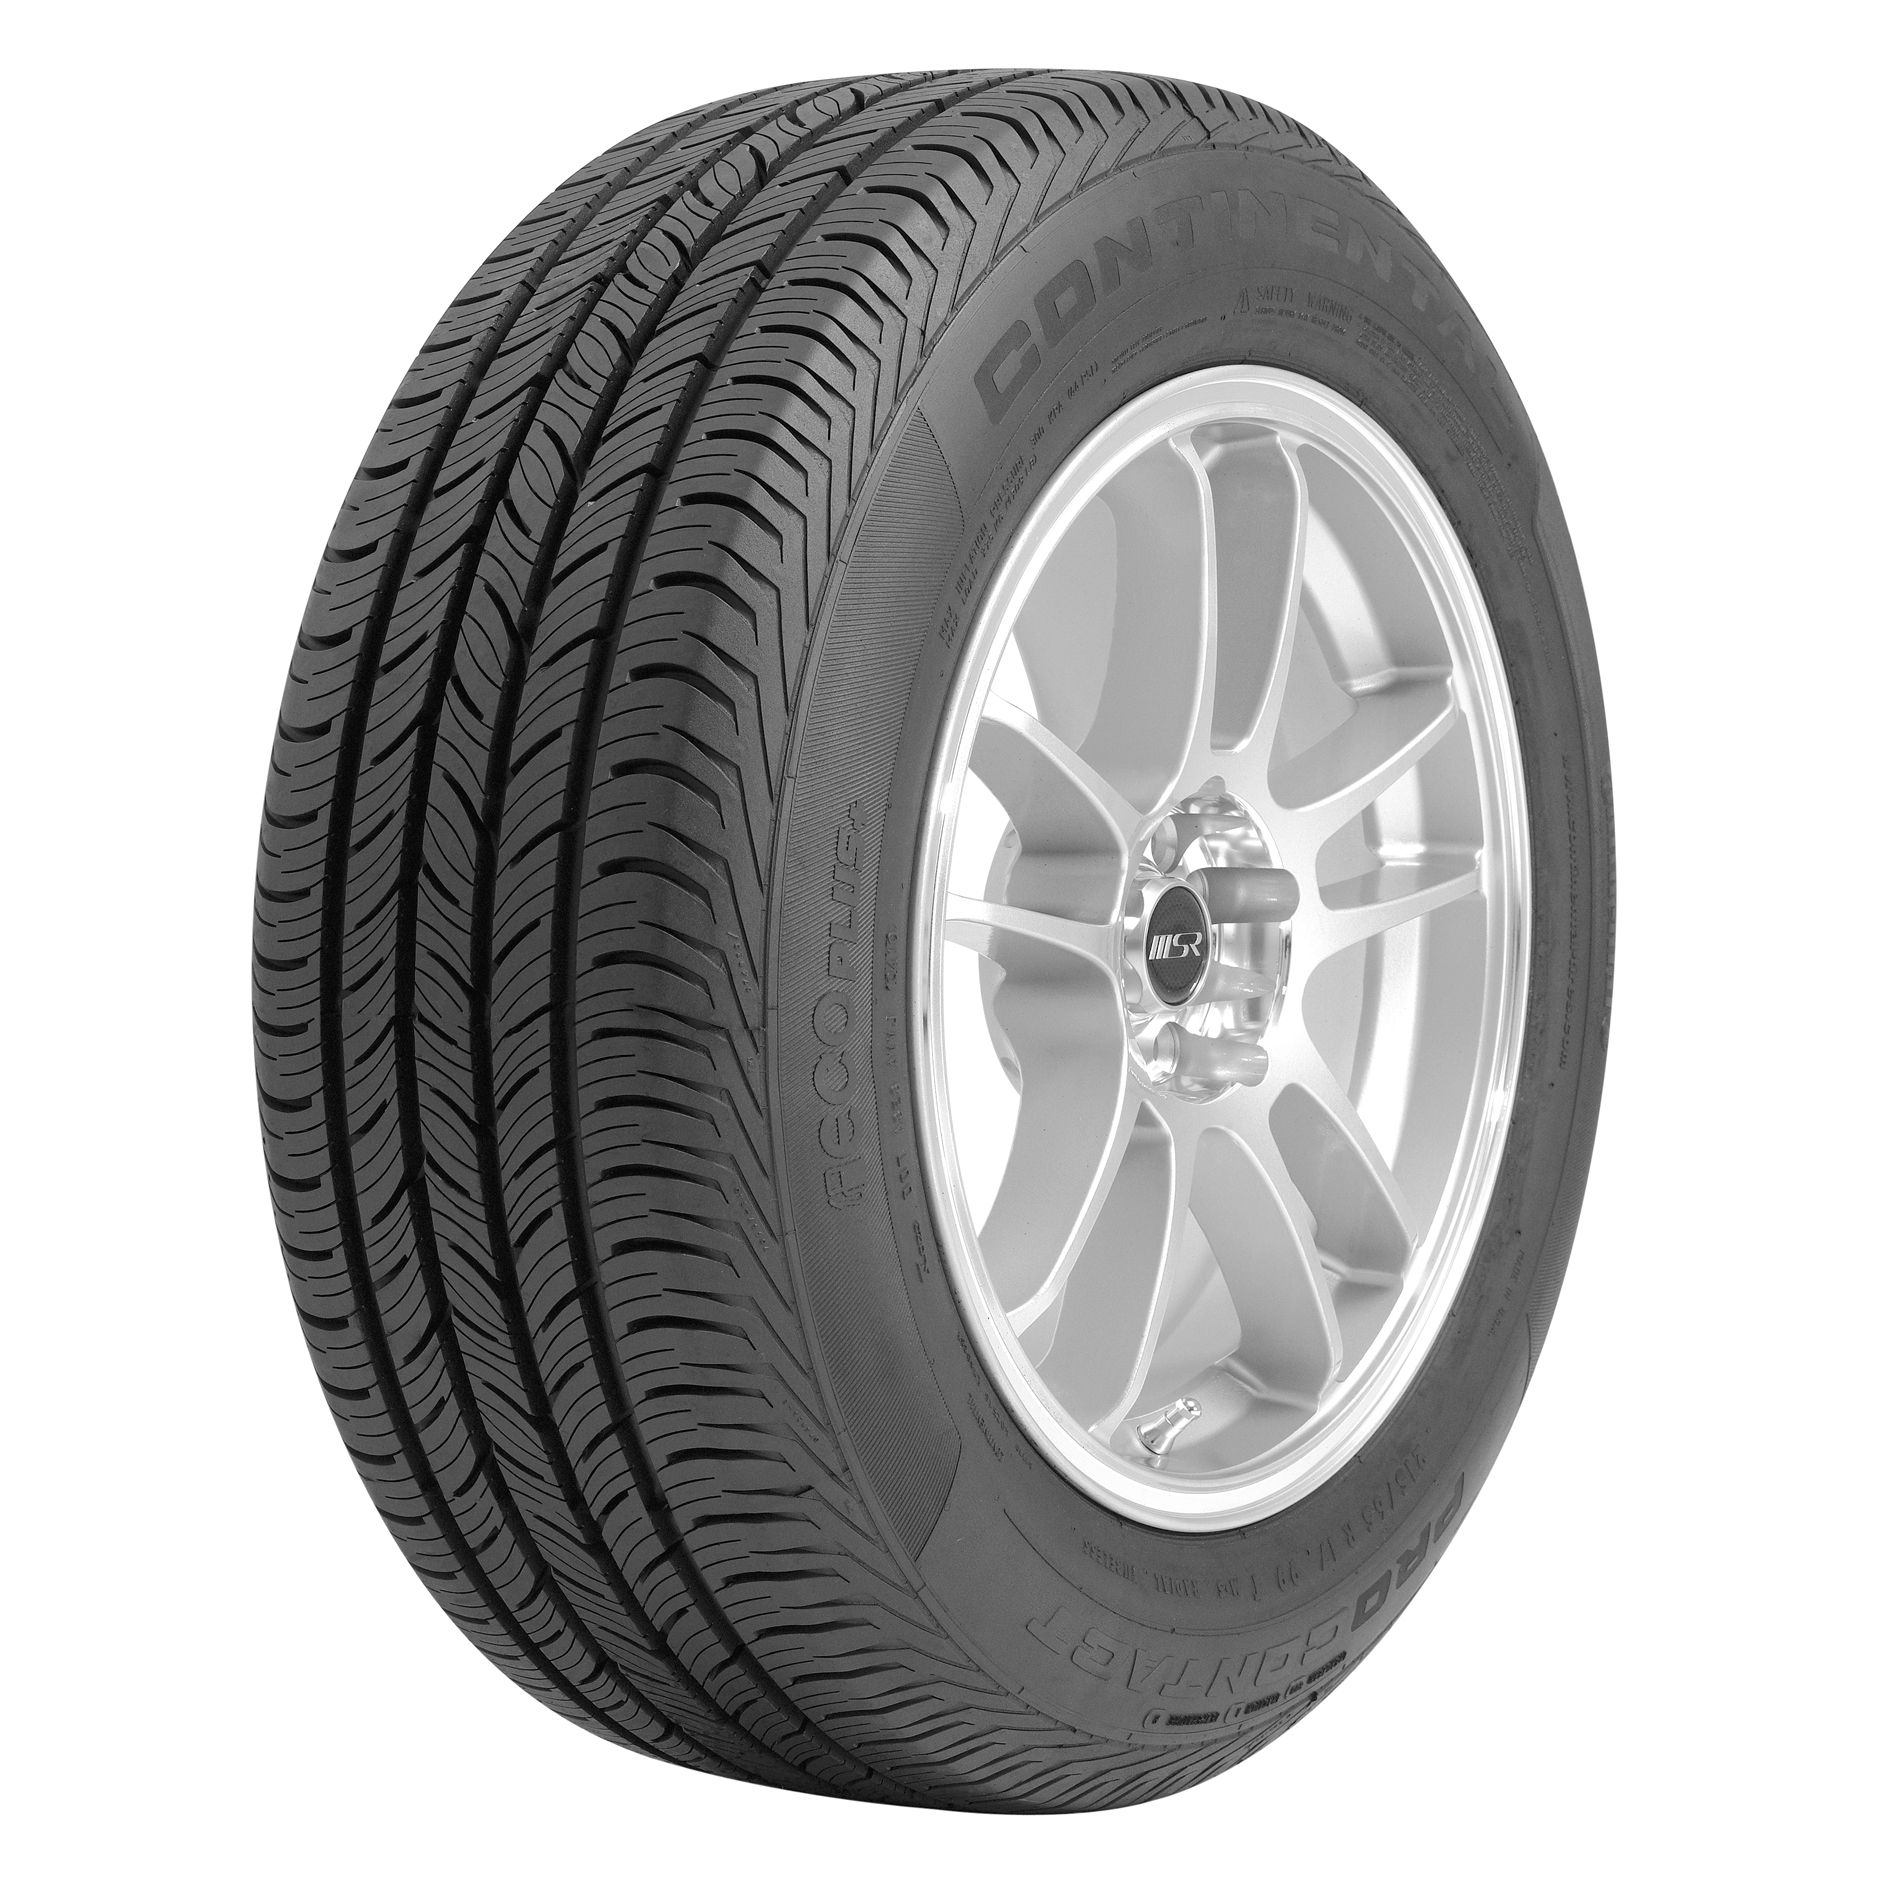 Continental Pro Contact Eco Plus - 205/60R15 91T BW - All-Season Tire